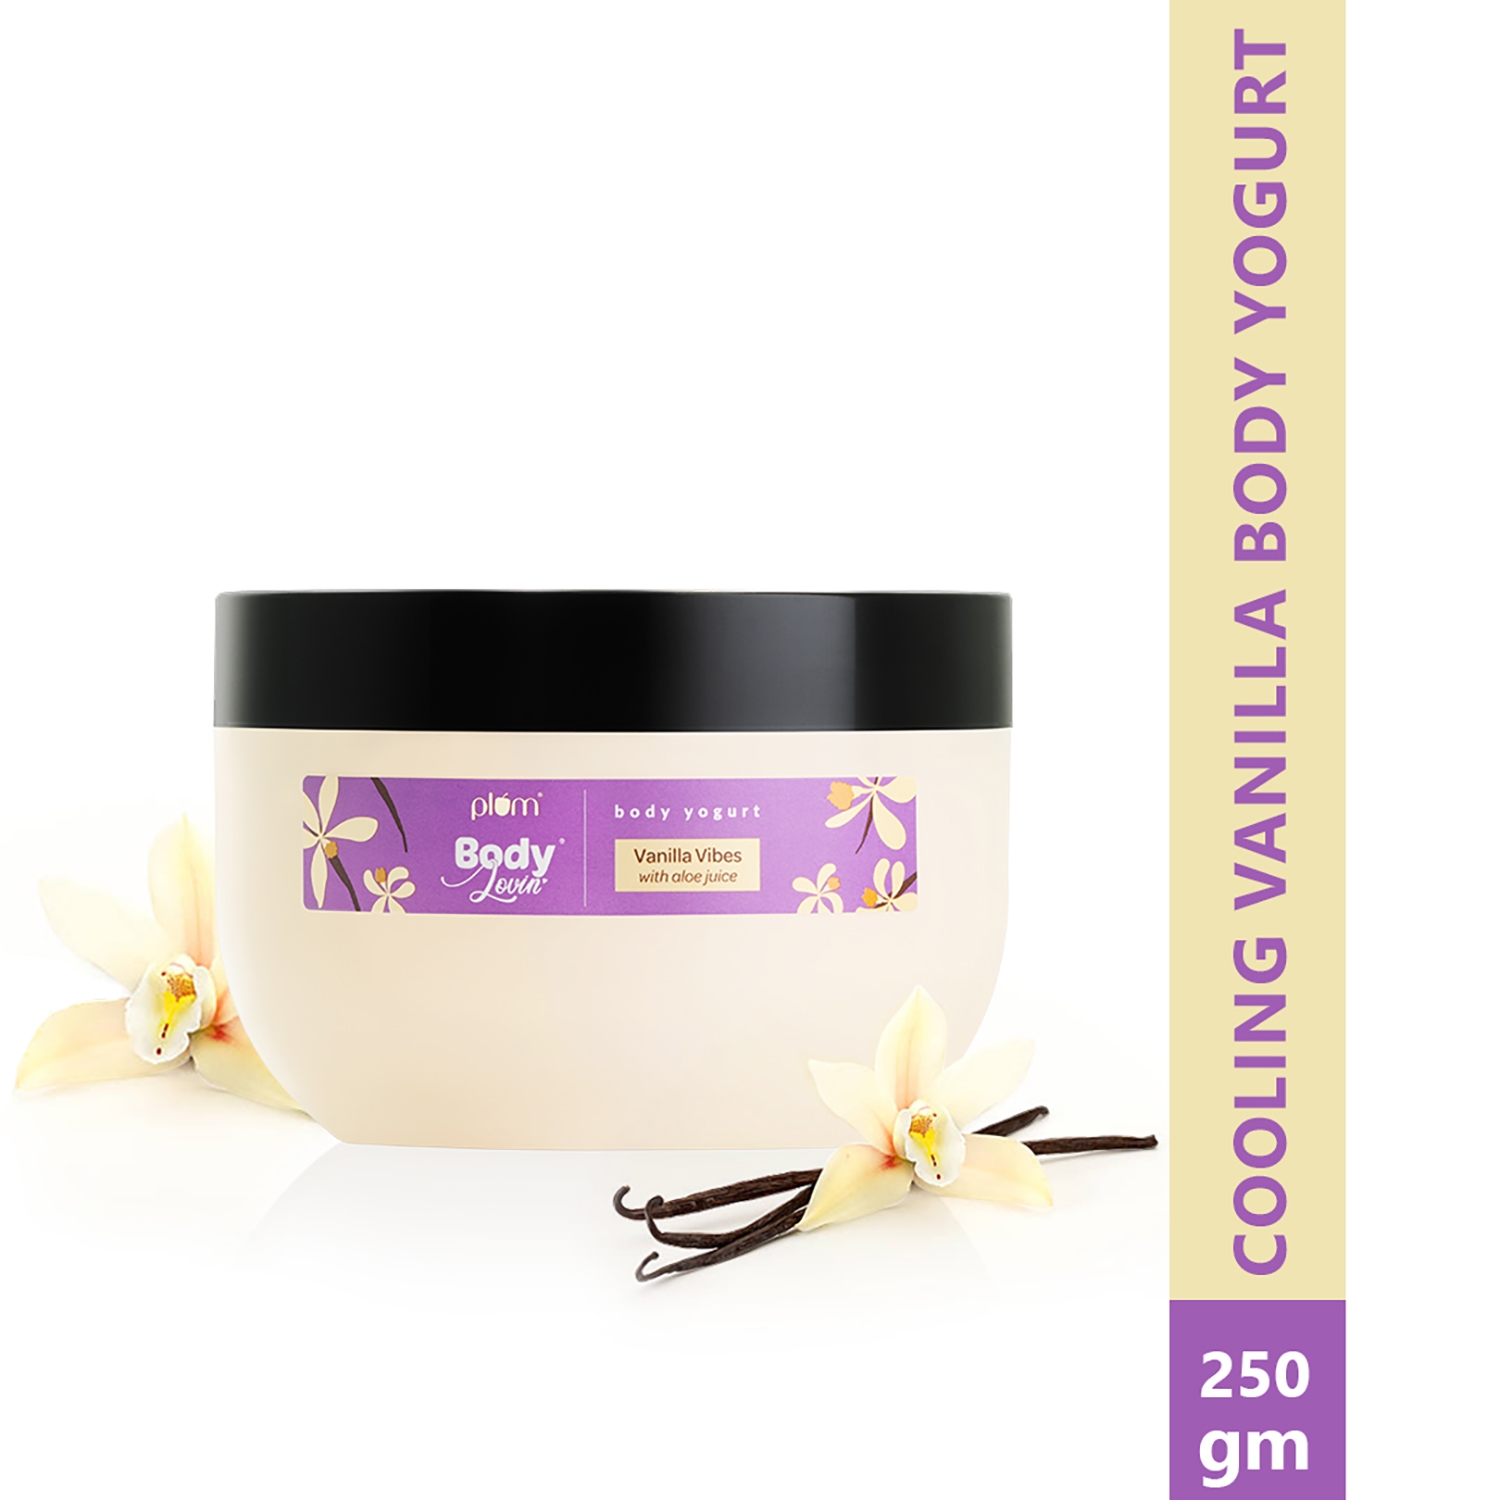 Plum | Plum BodyLovin' Vanilla Vibes Body Yogurt Lightweight Hydration, Quick absorbing formula (250g)